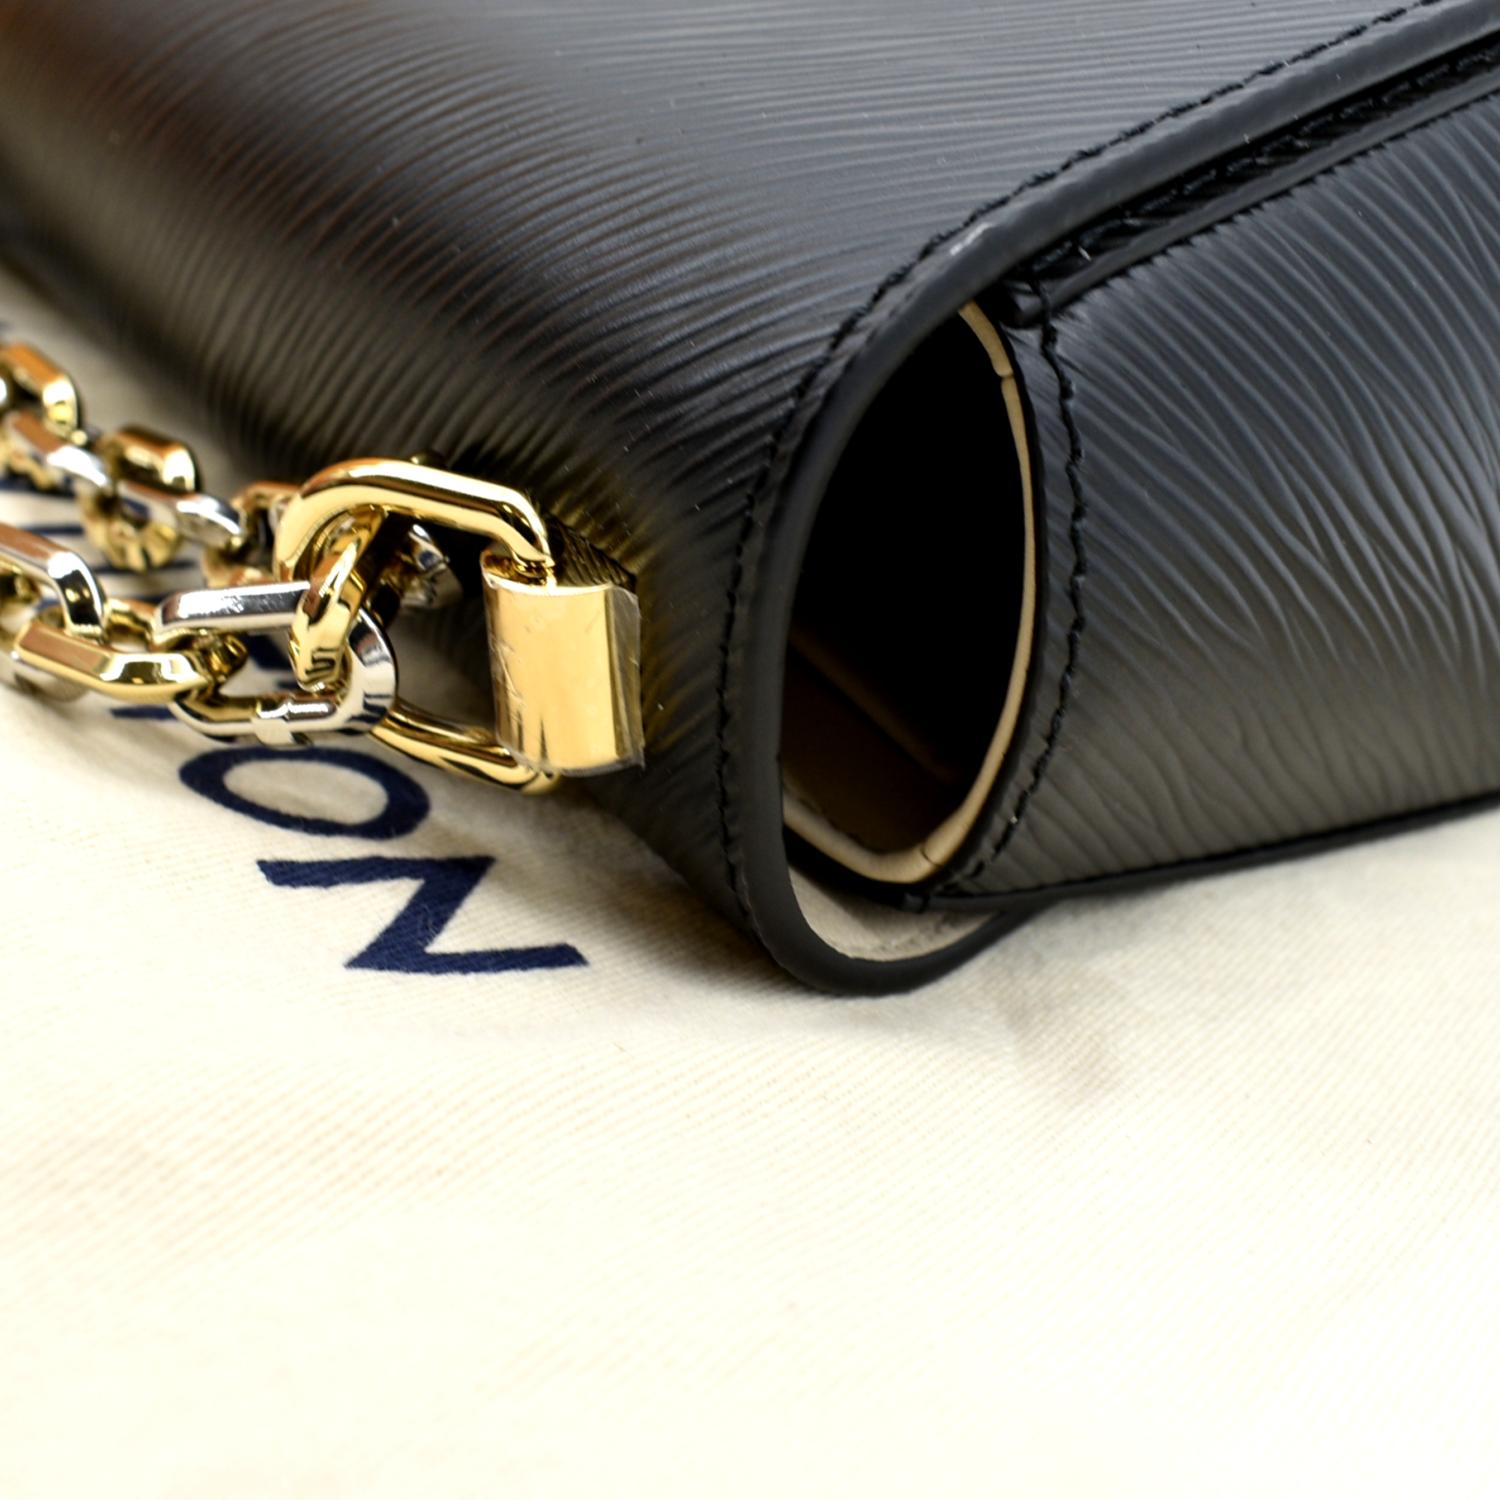 Louis Vuitton Twist Wallet Black/Gold EPI